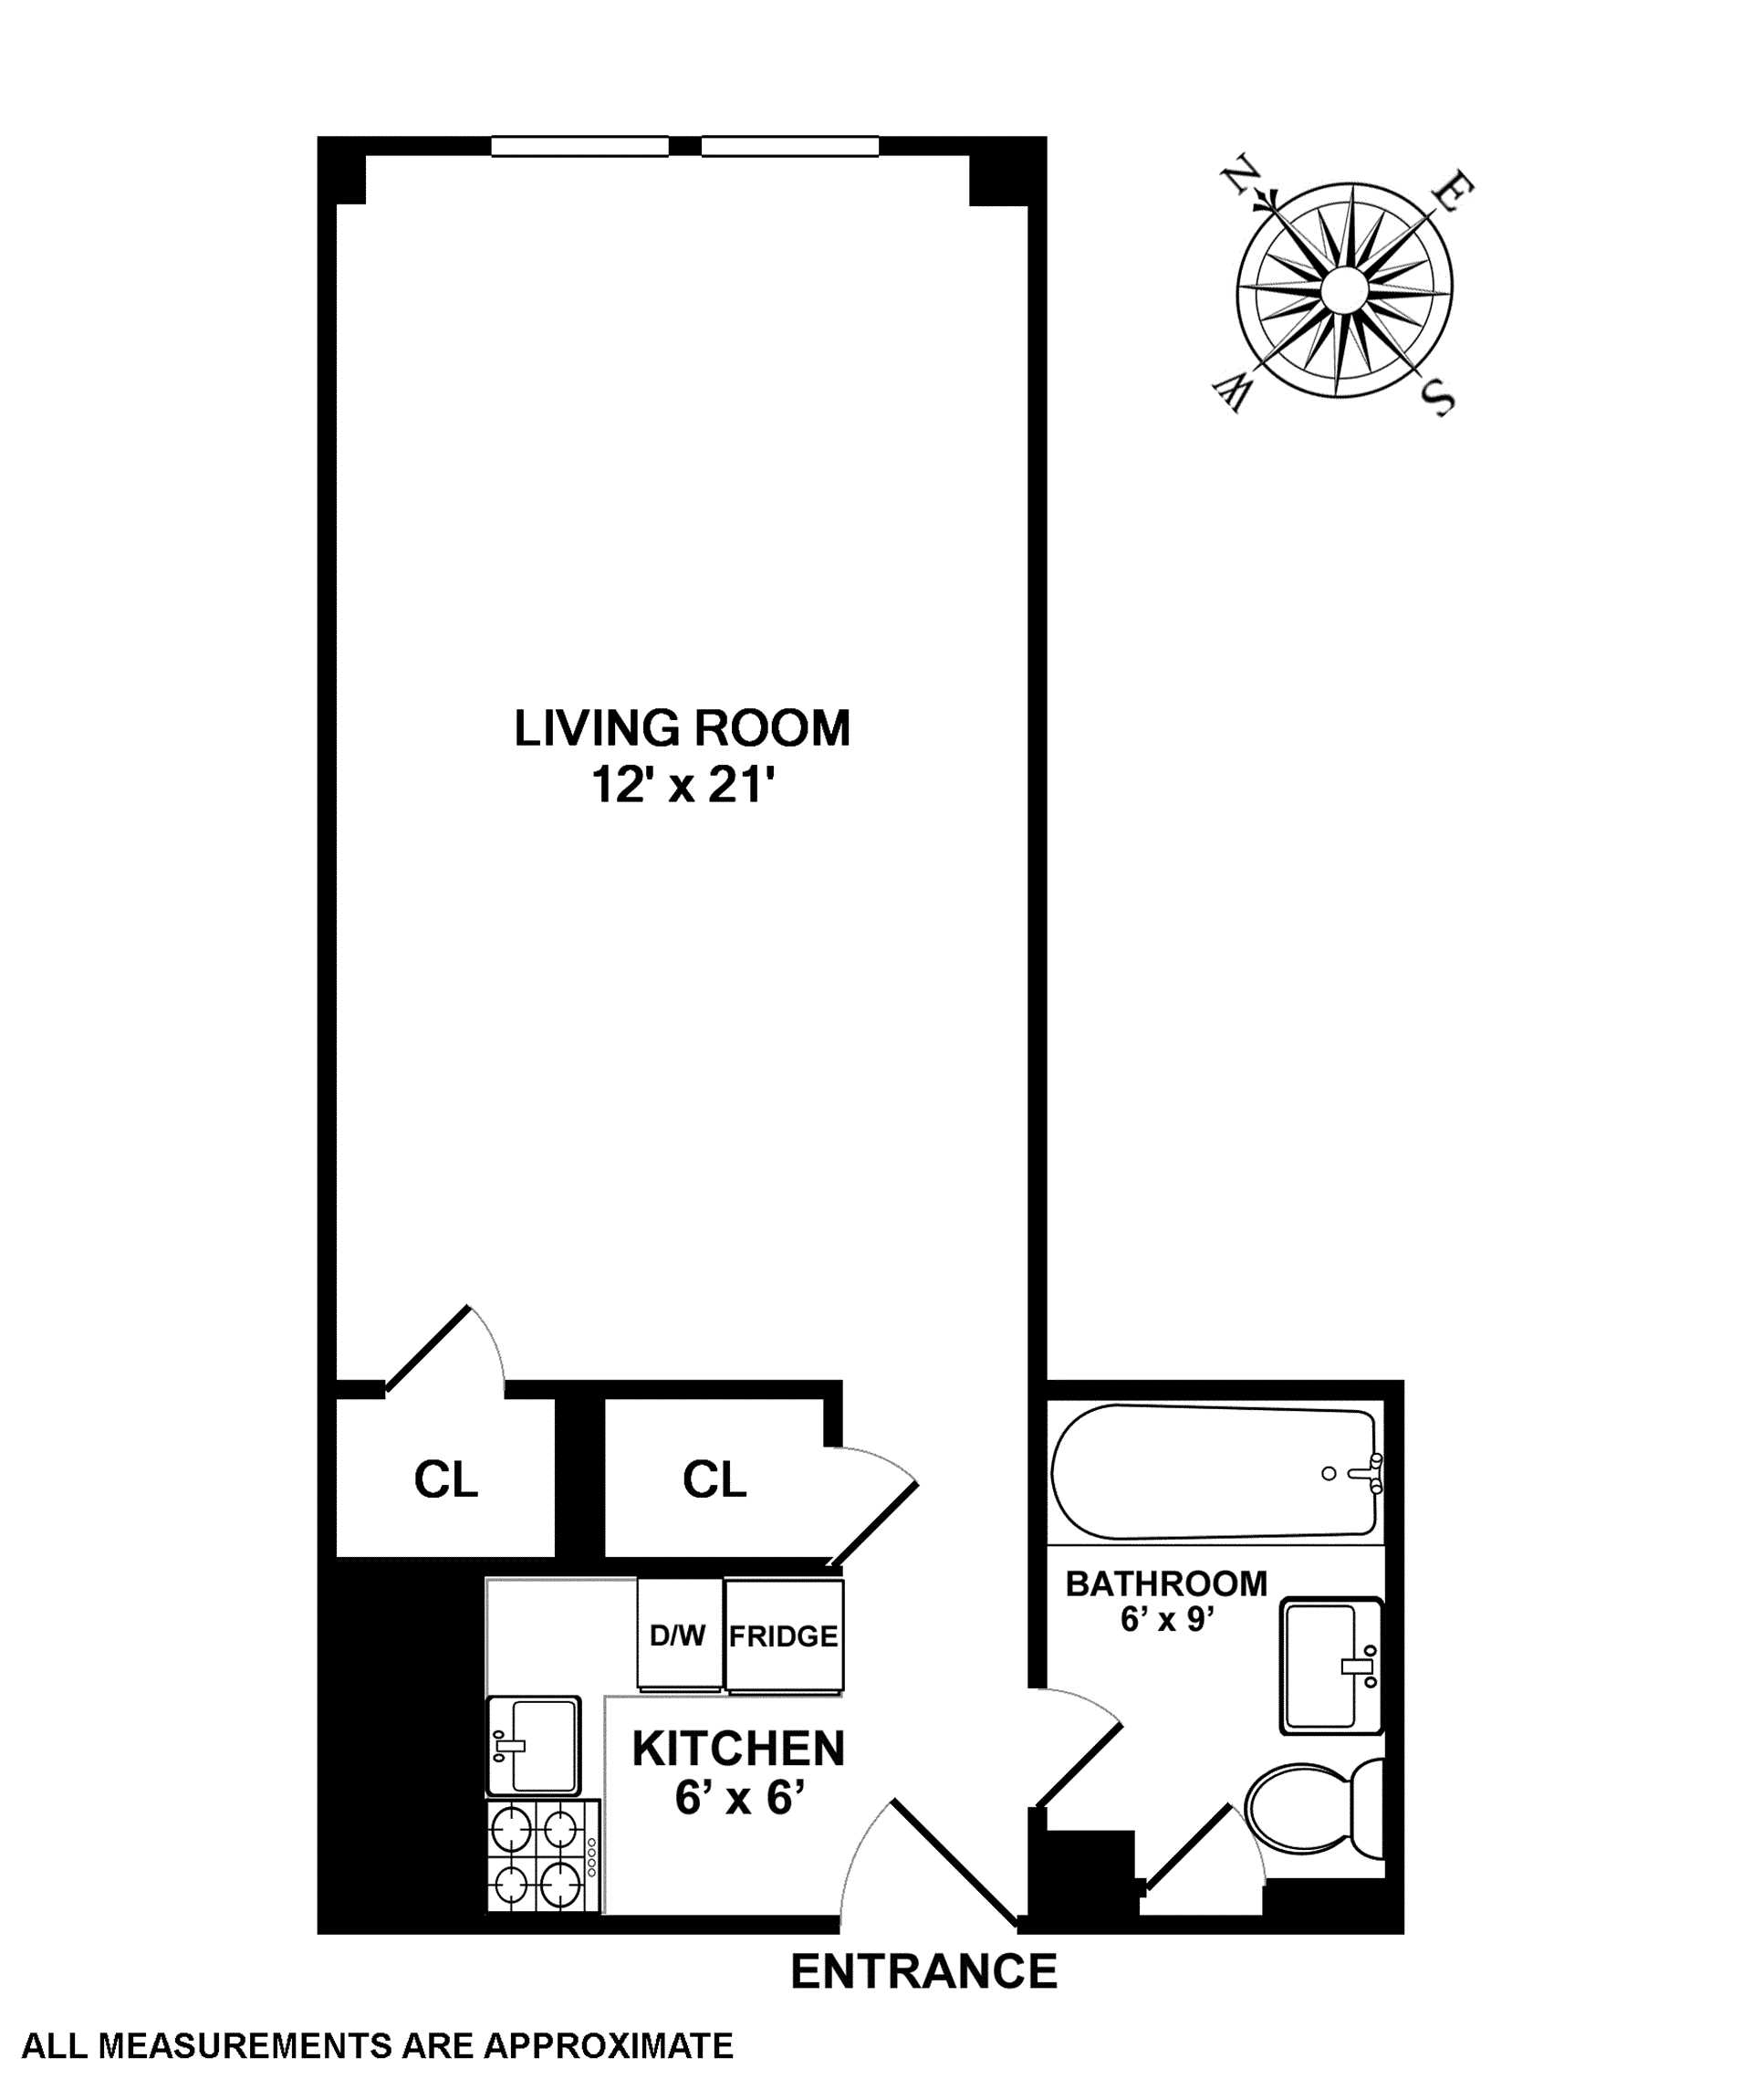 Floorplan for 235 West 102nd Street, 9B